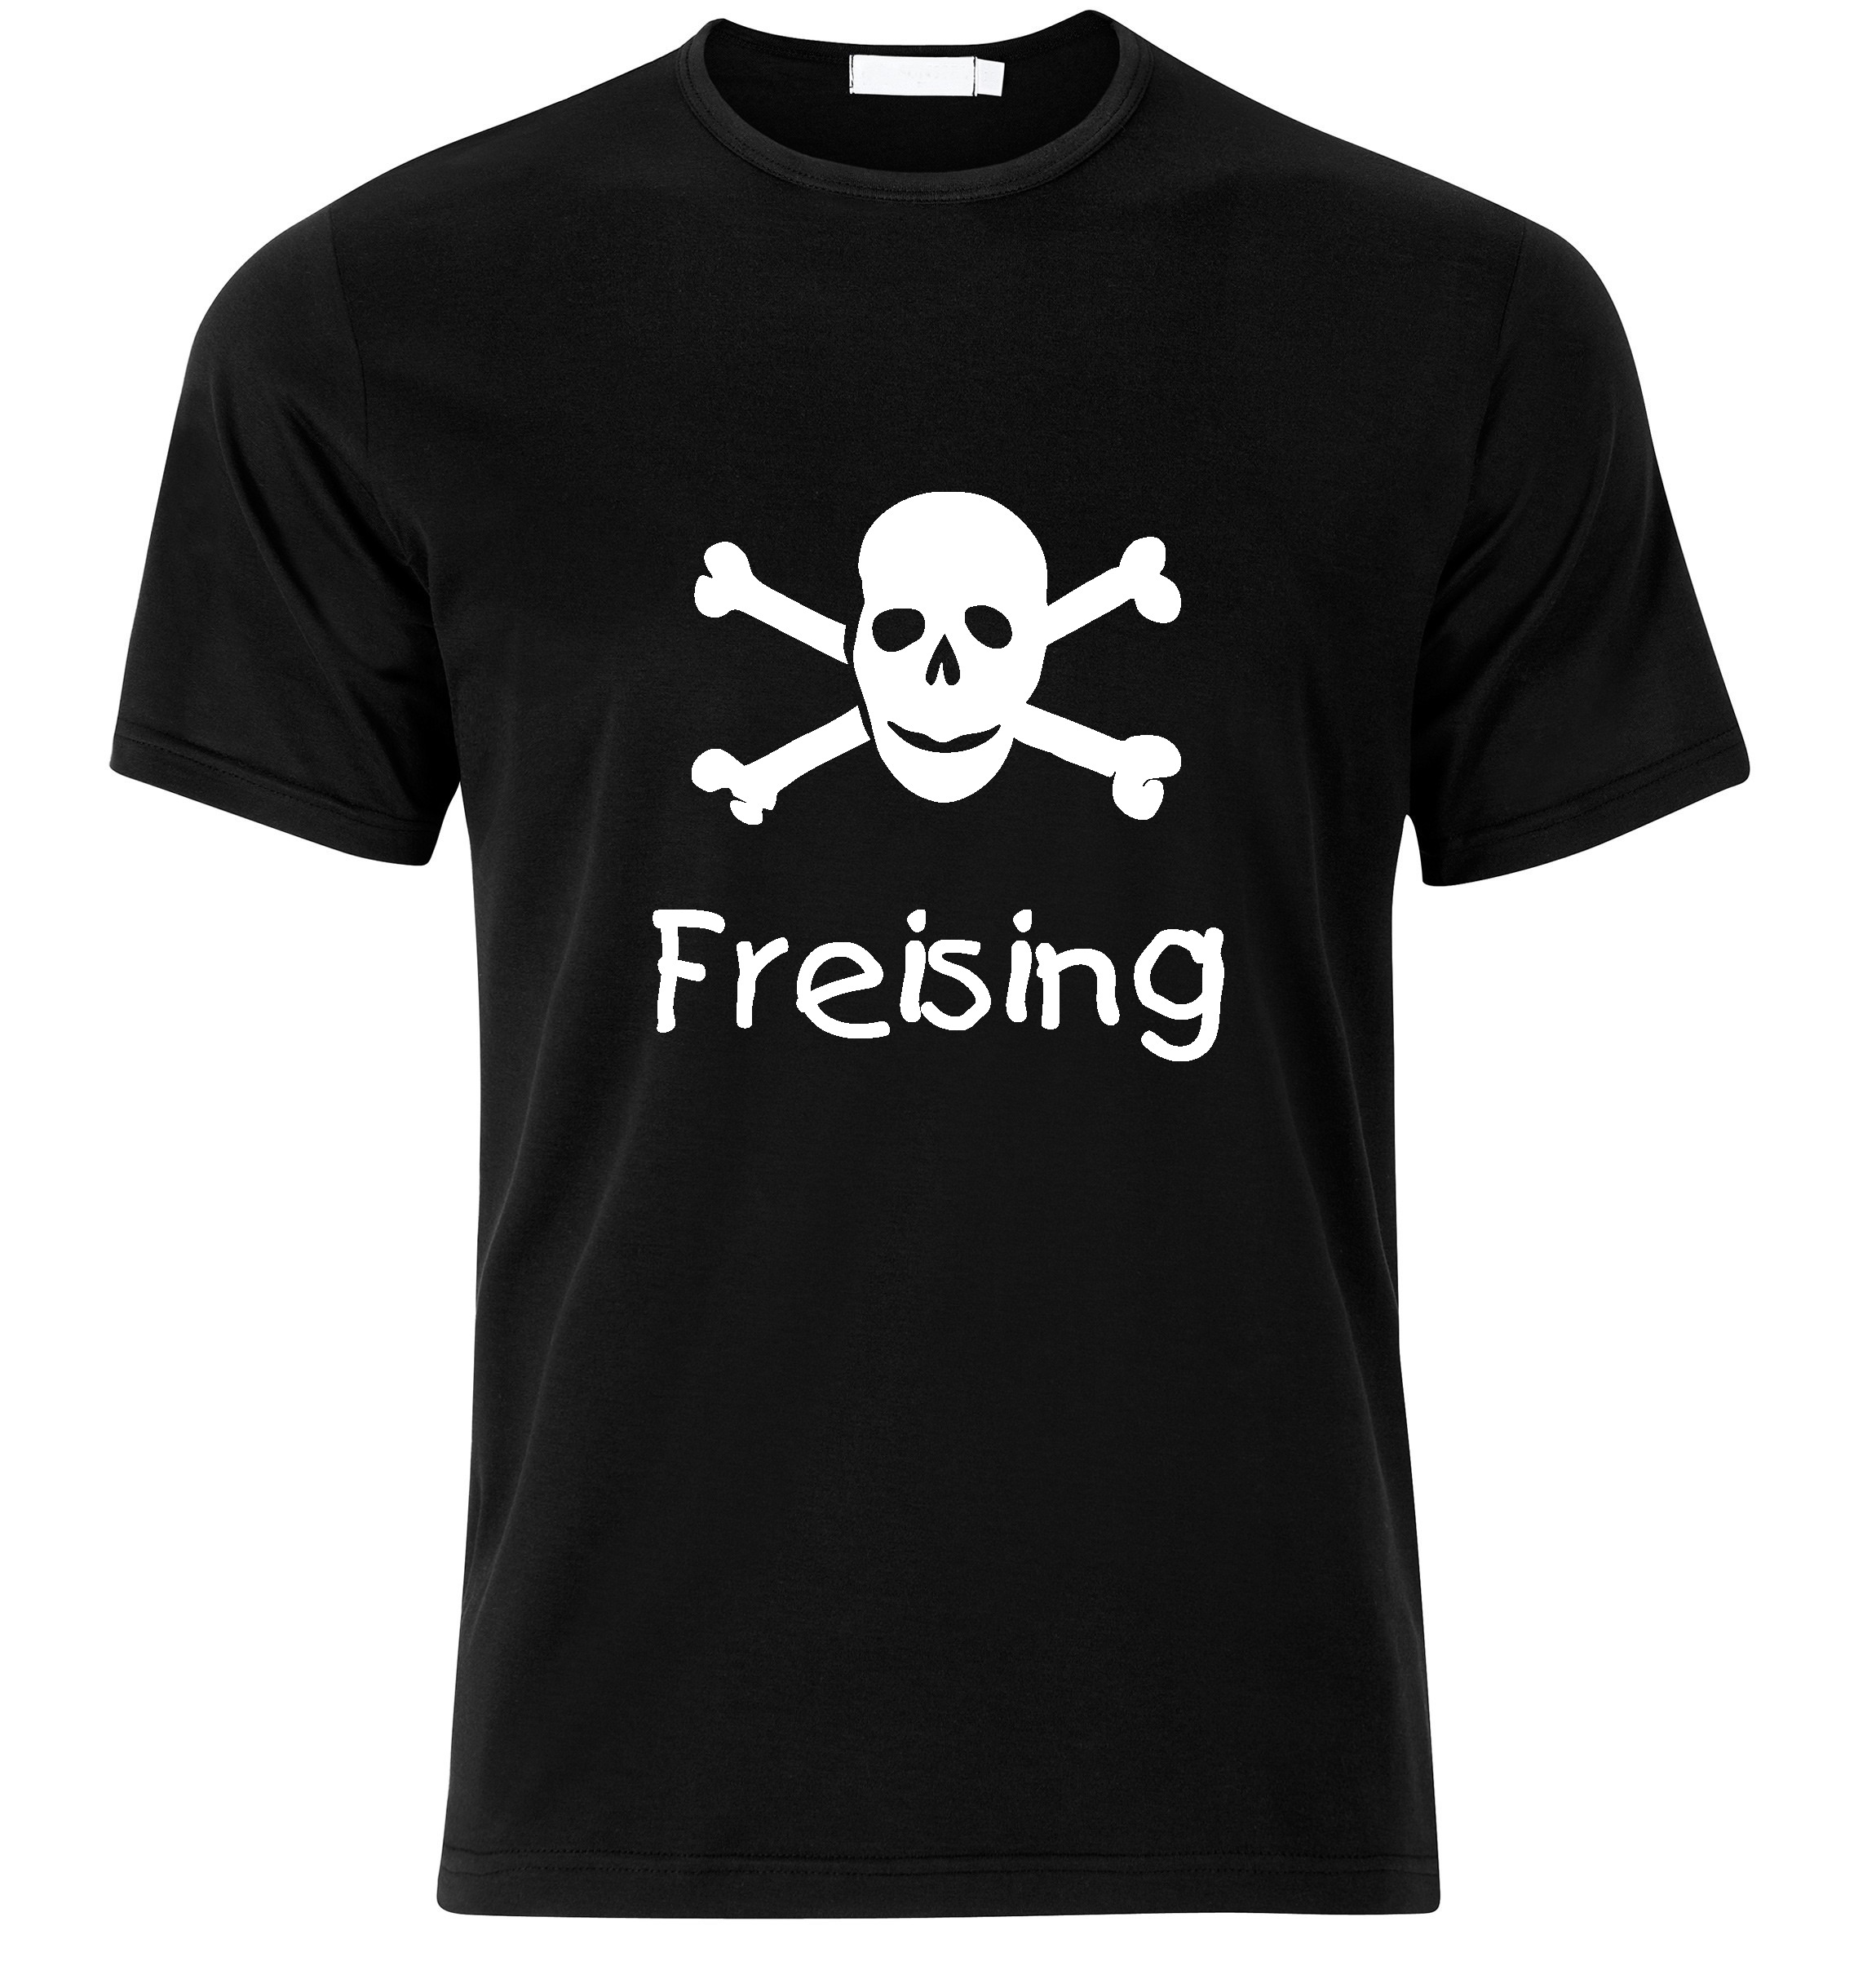 T-Shirt Freising Jolly Roger, Totenkopf